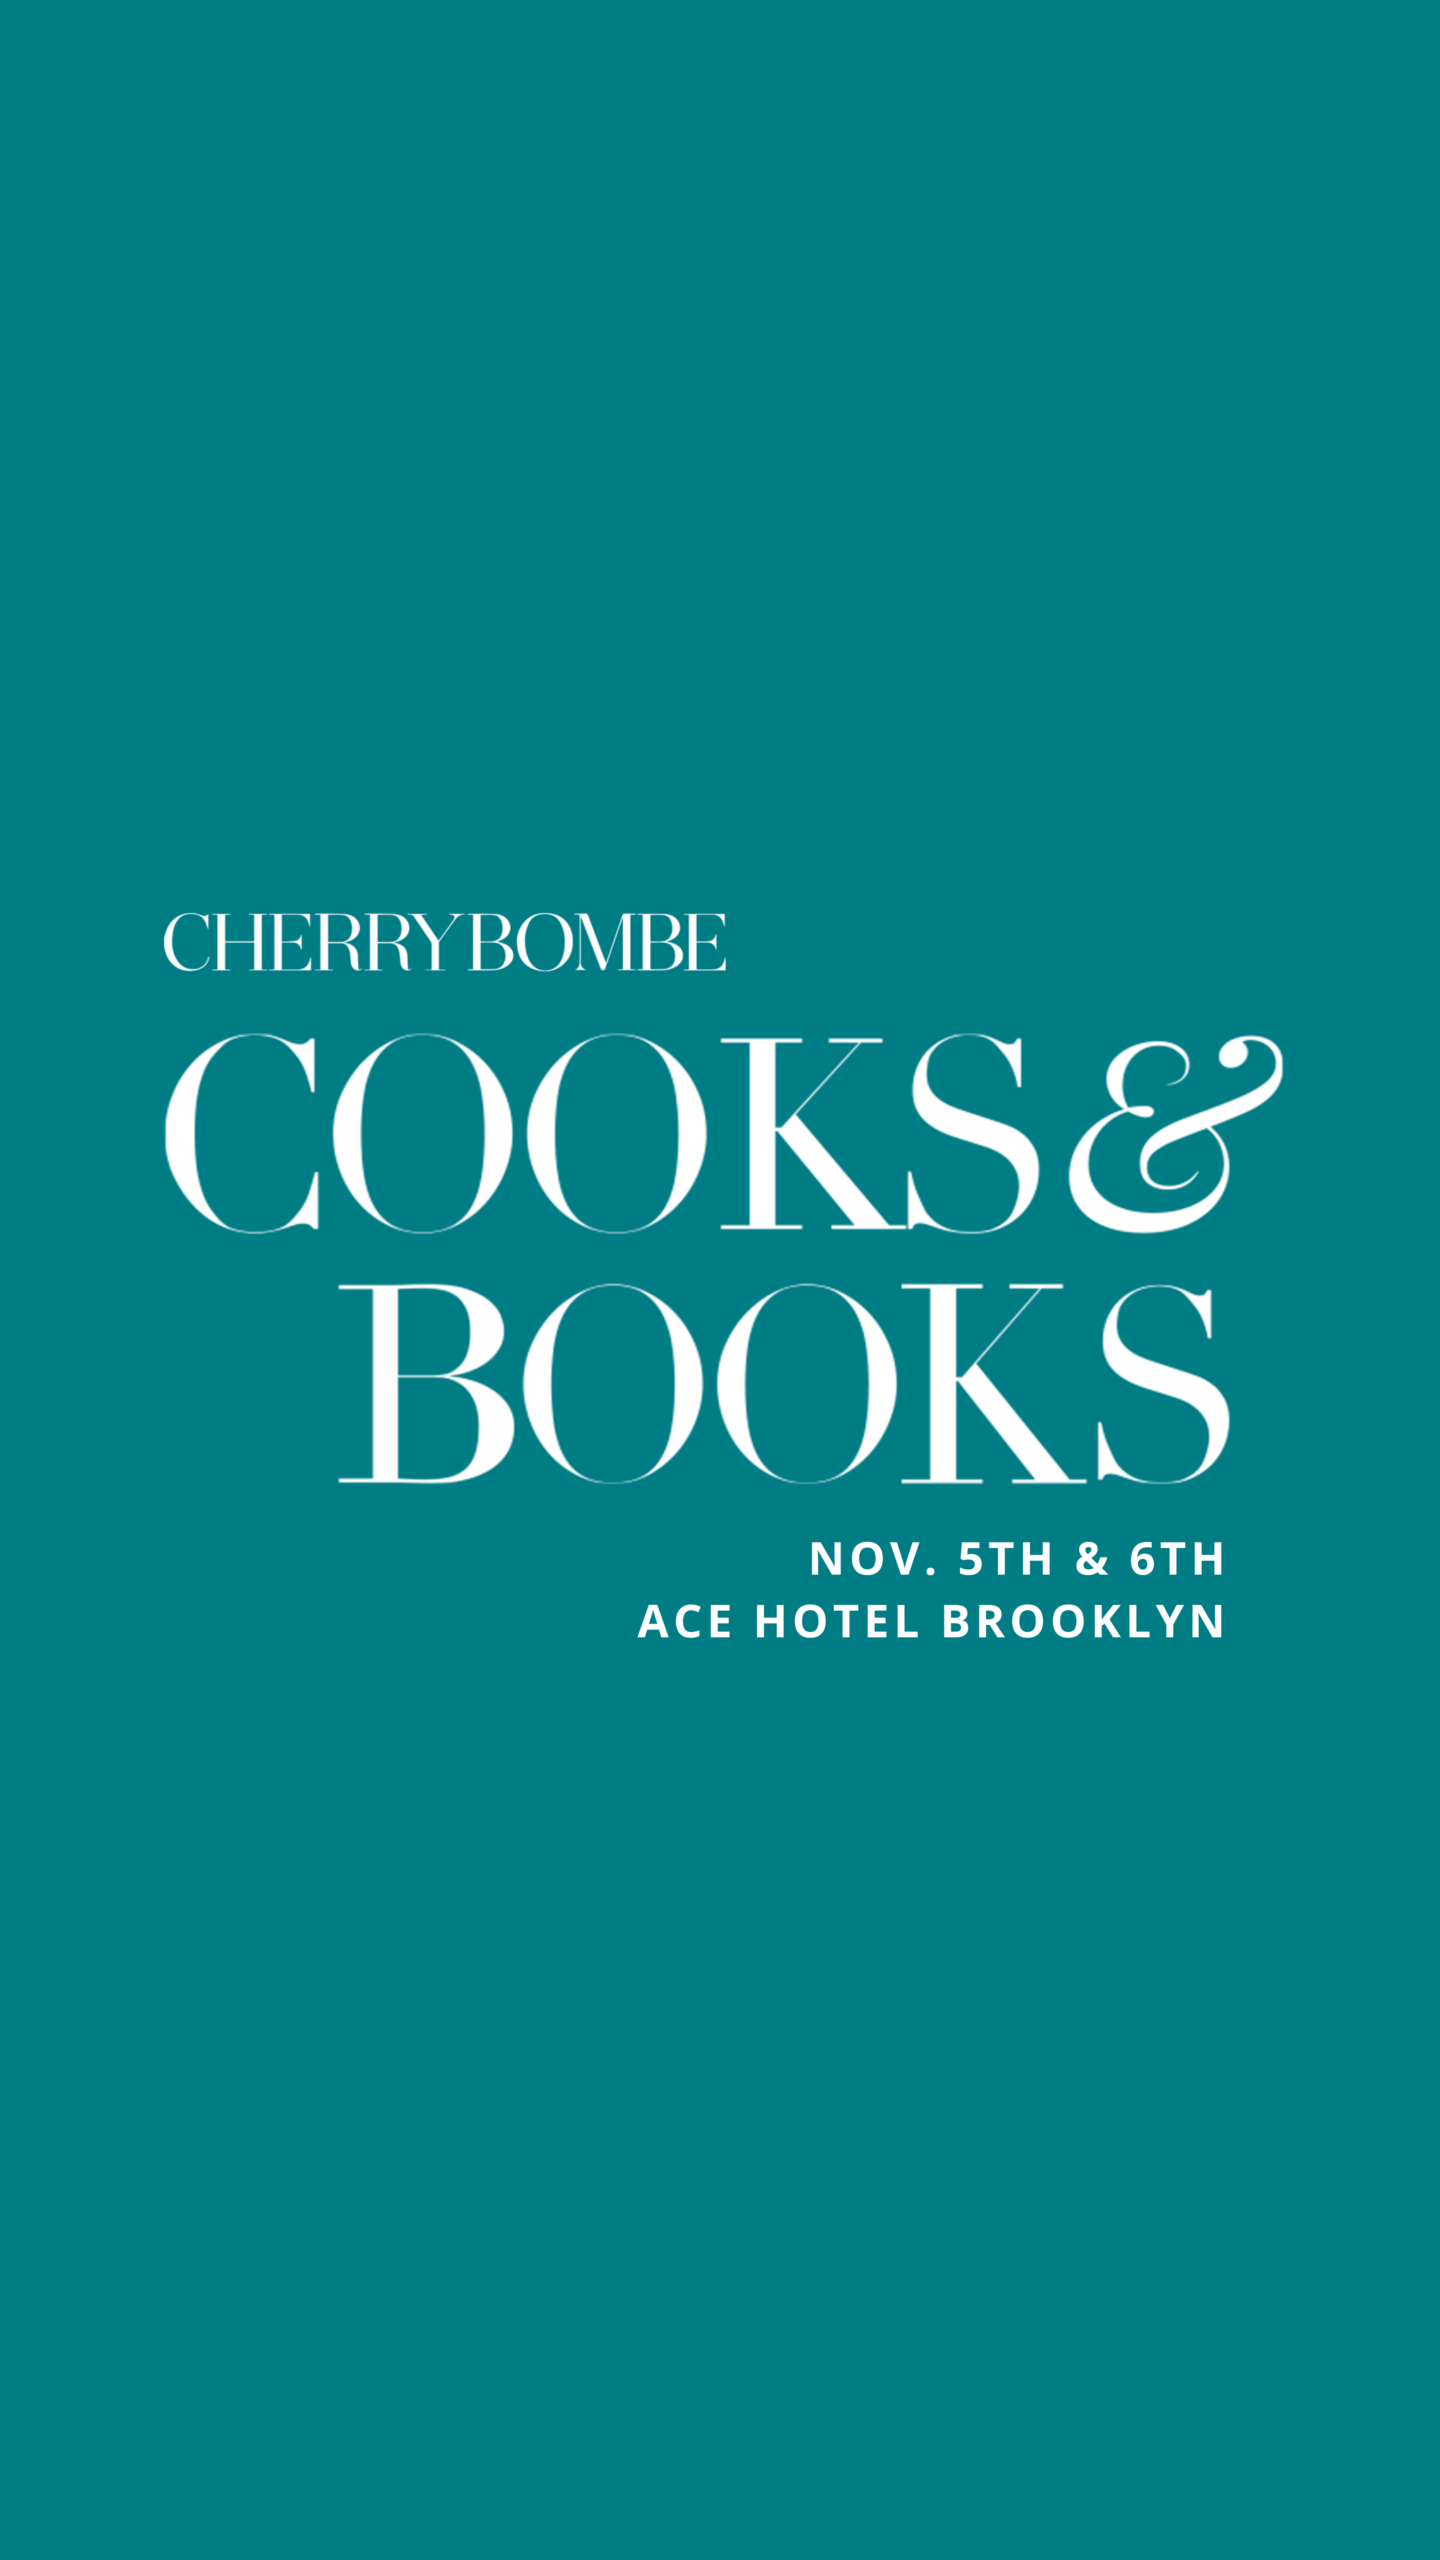 cherry bombe cooks & books ace hotel brooklyn